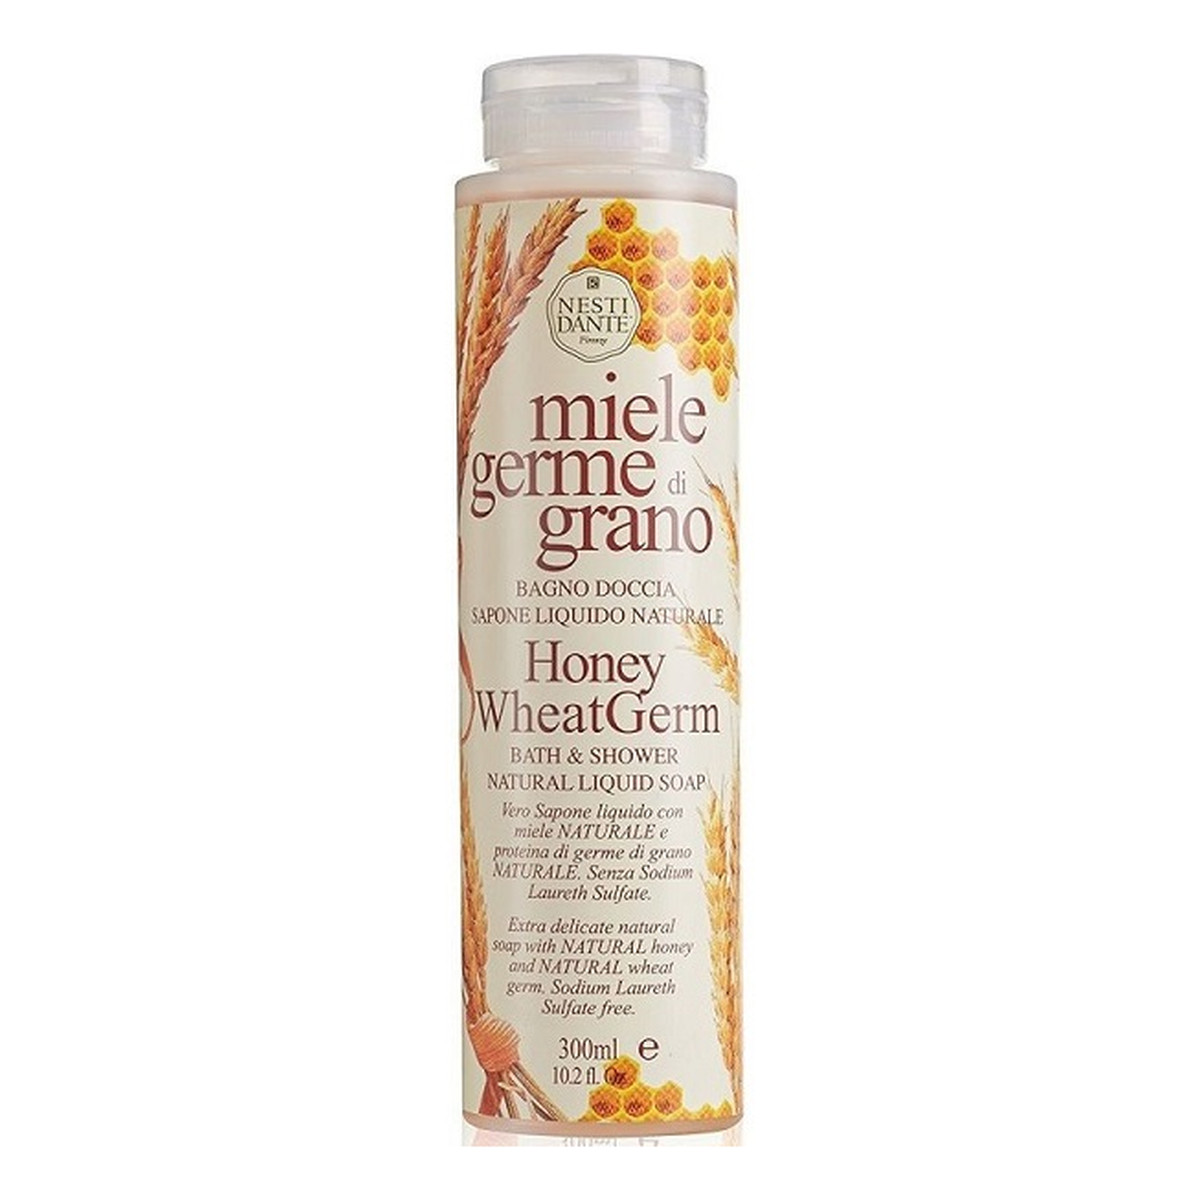 Nesti Dante Miele Germe Di Grano Honey Wheat Germ Bath & Shower Natural Liquid Soap Żel pod prysznic 300ml